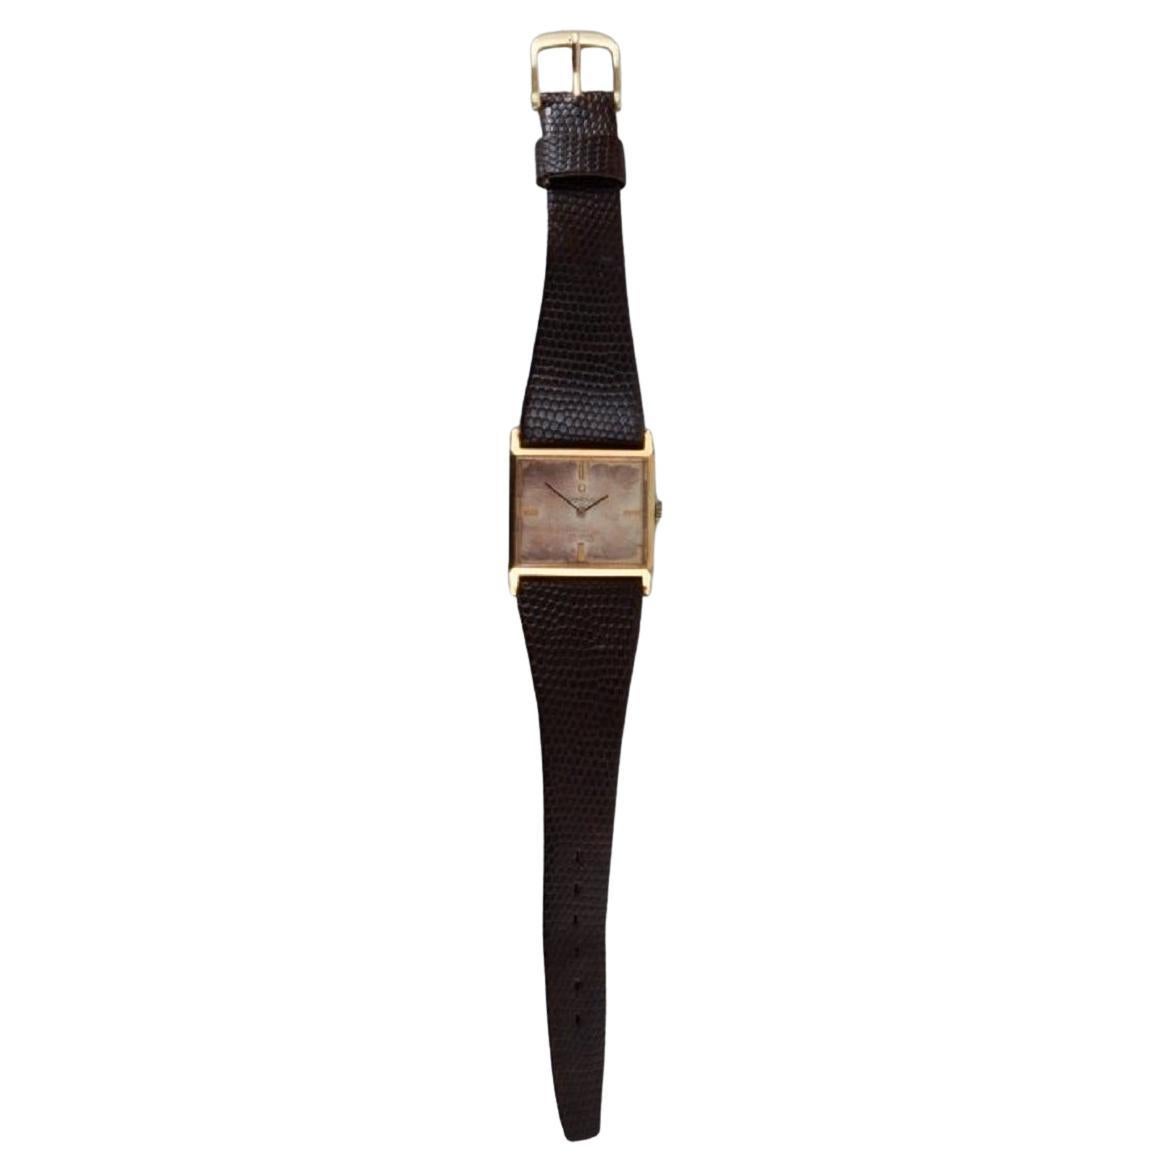 Omega Automatic de Ville ladies wristwatch, leather strap. Approx. 1960s. For Sale